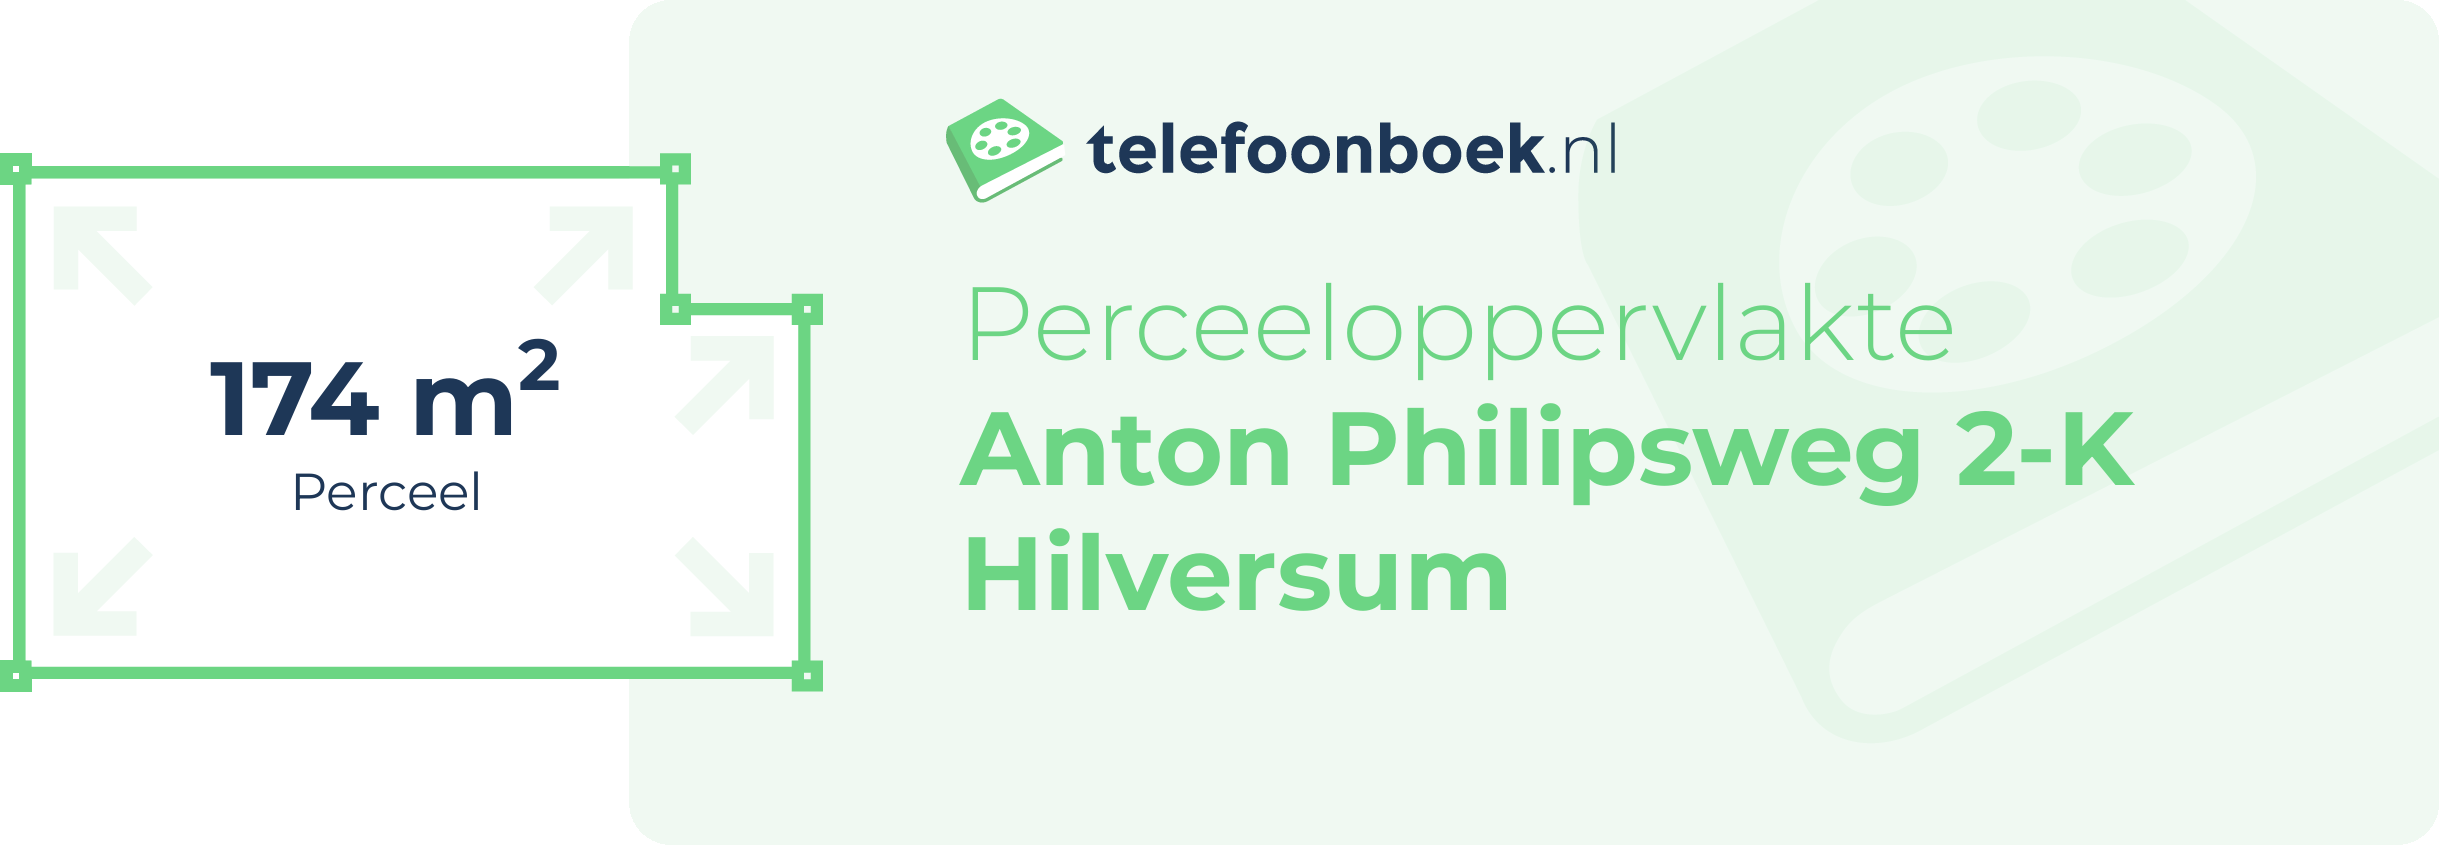 Perceeloppervlakte Anton Philipsweg 2-K Hilversum